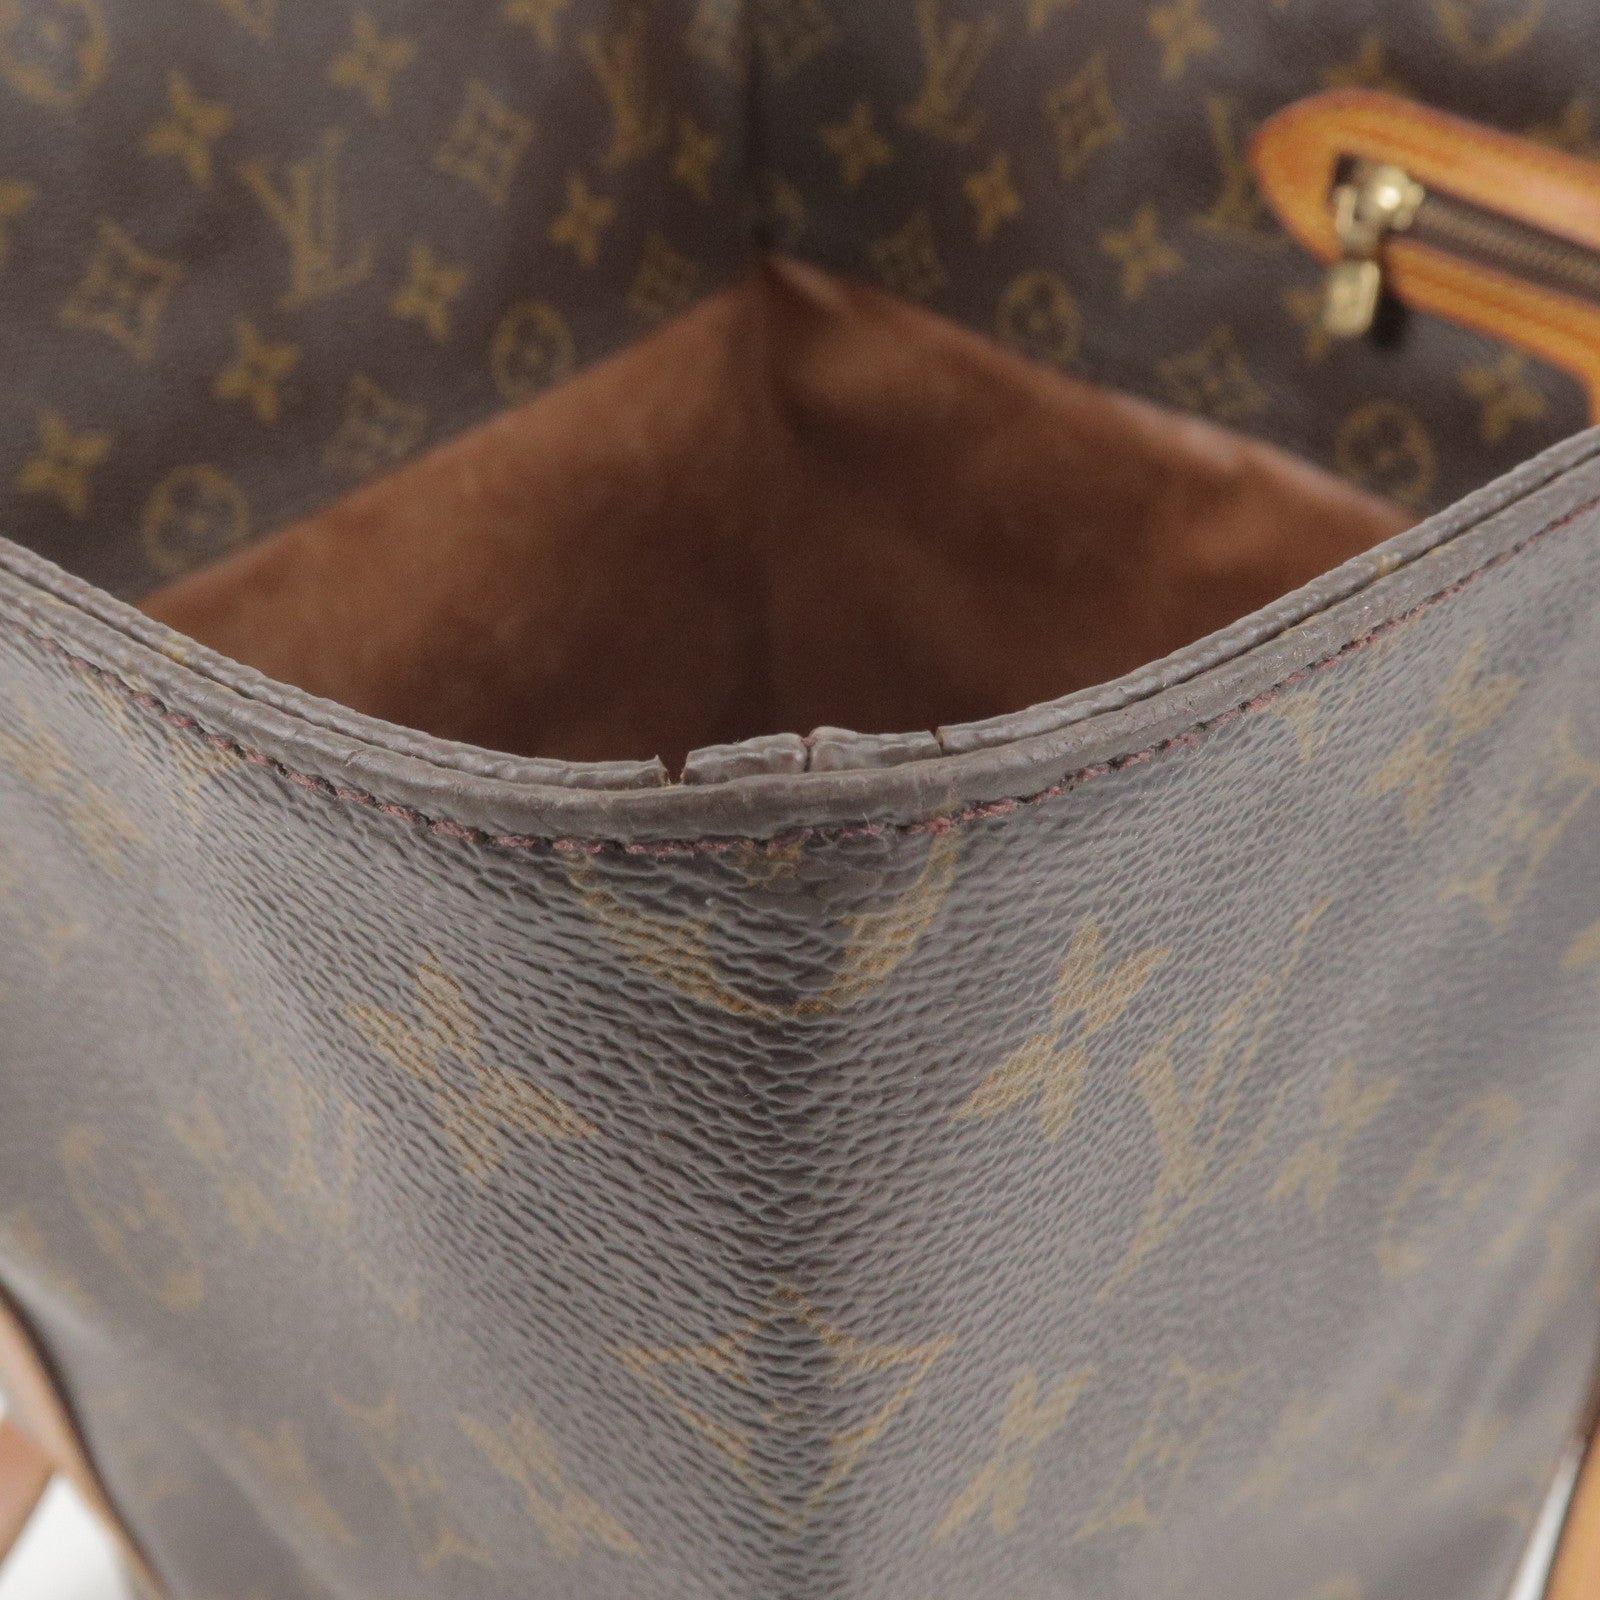 Louis Vuitton Louis Vuitton Sac Plat Ebene Damier Canvas Tote Handbag